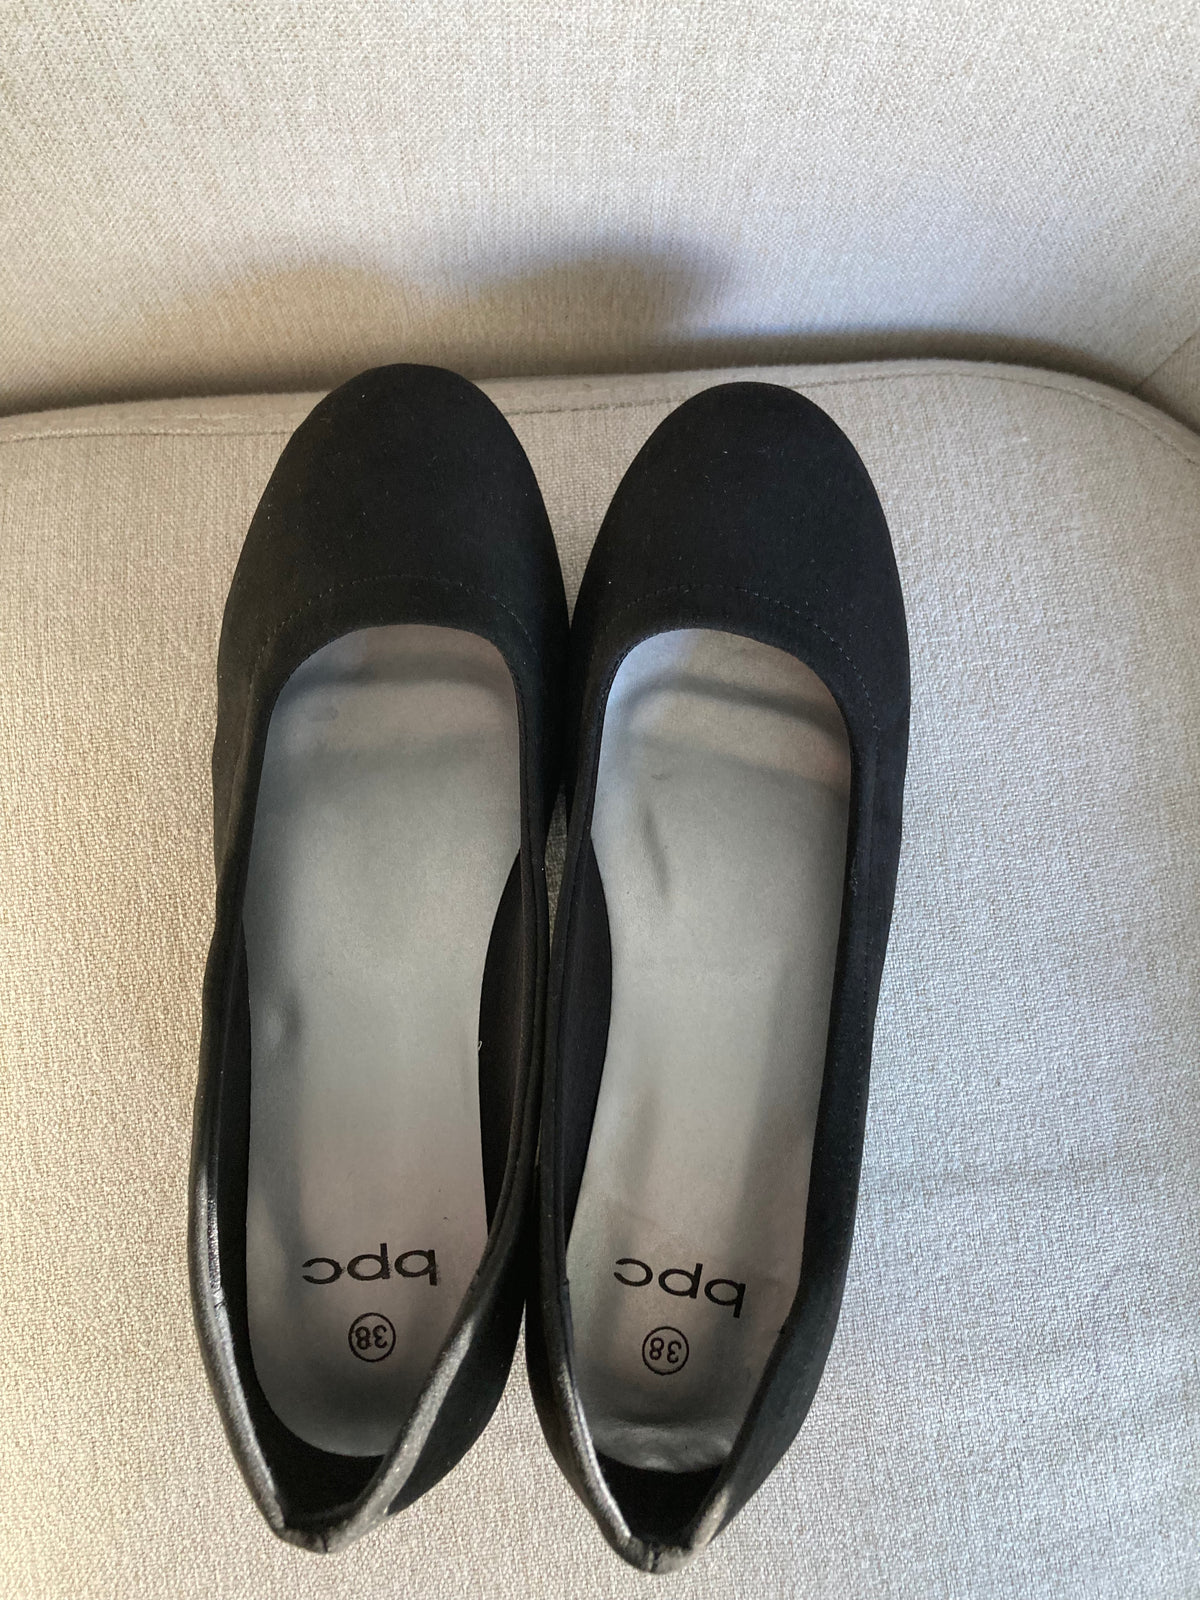 Black suede block heels by BPC size 5